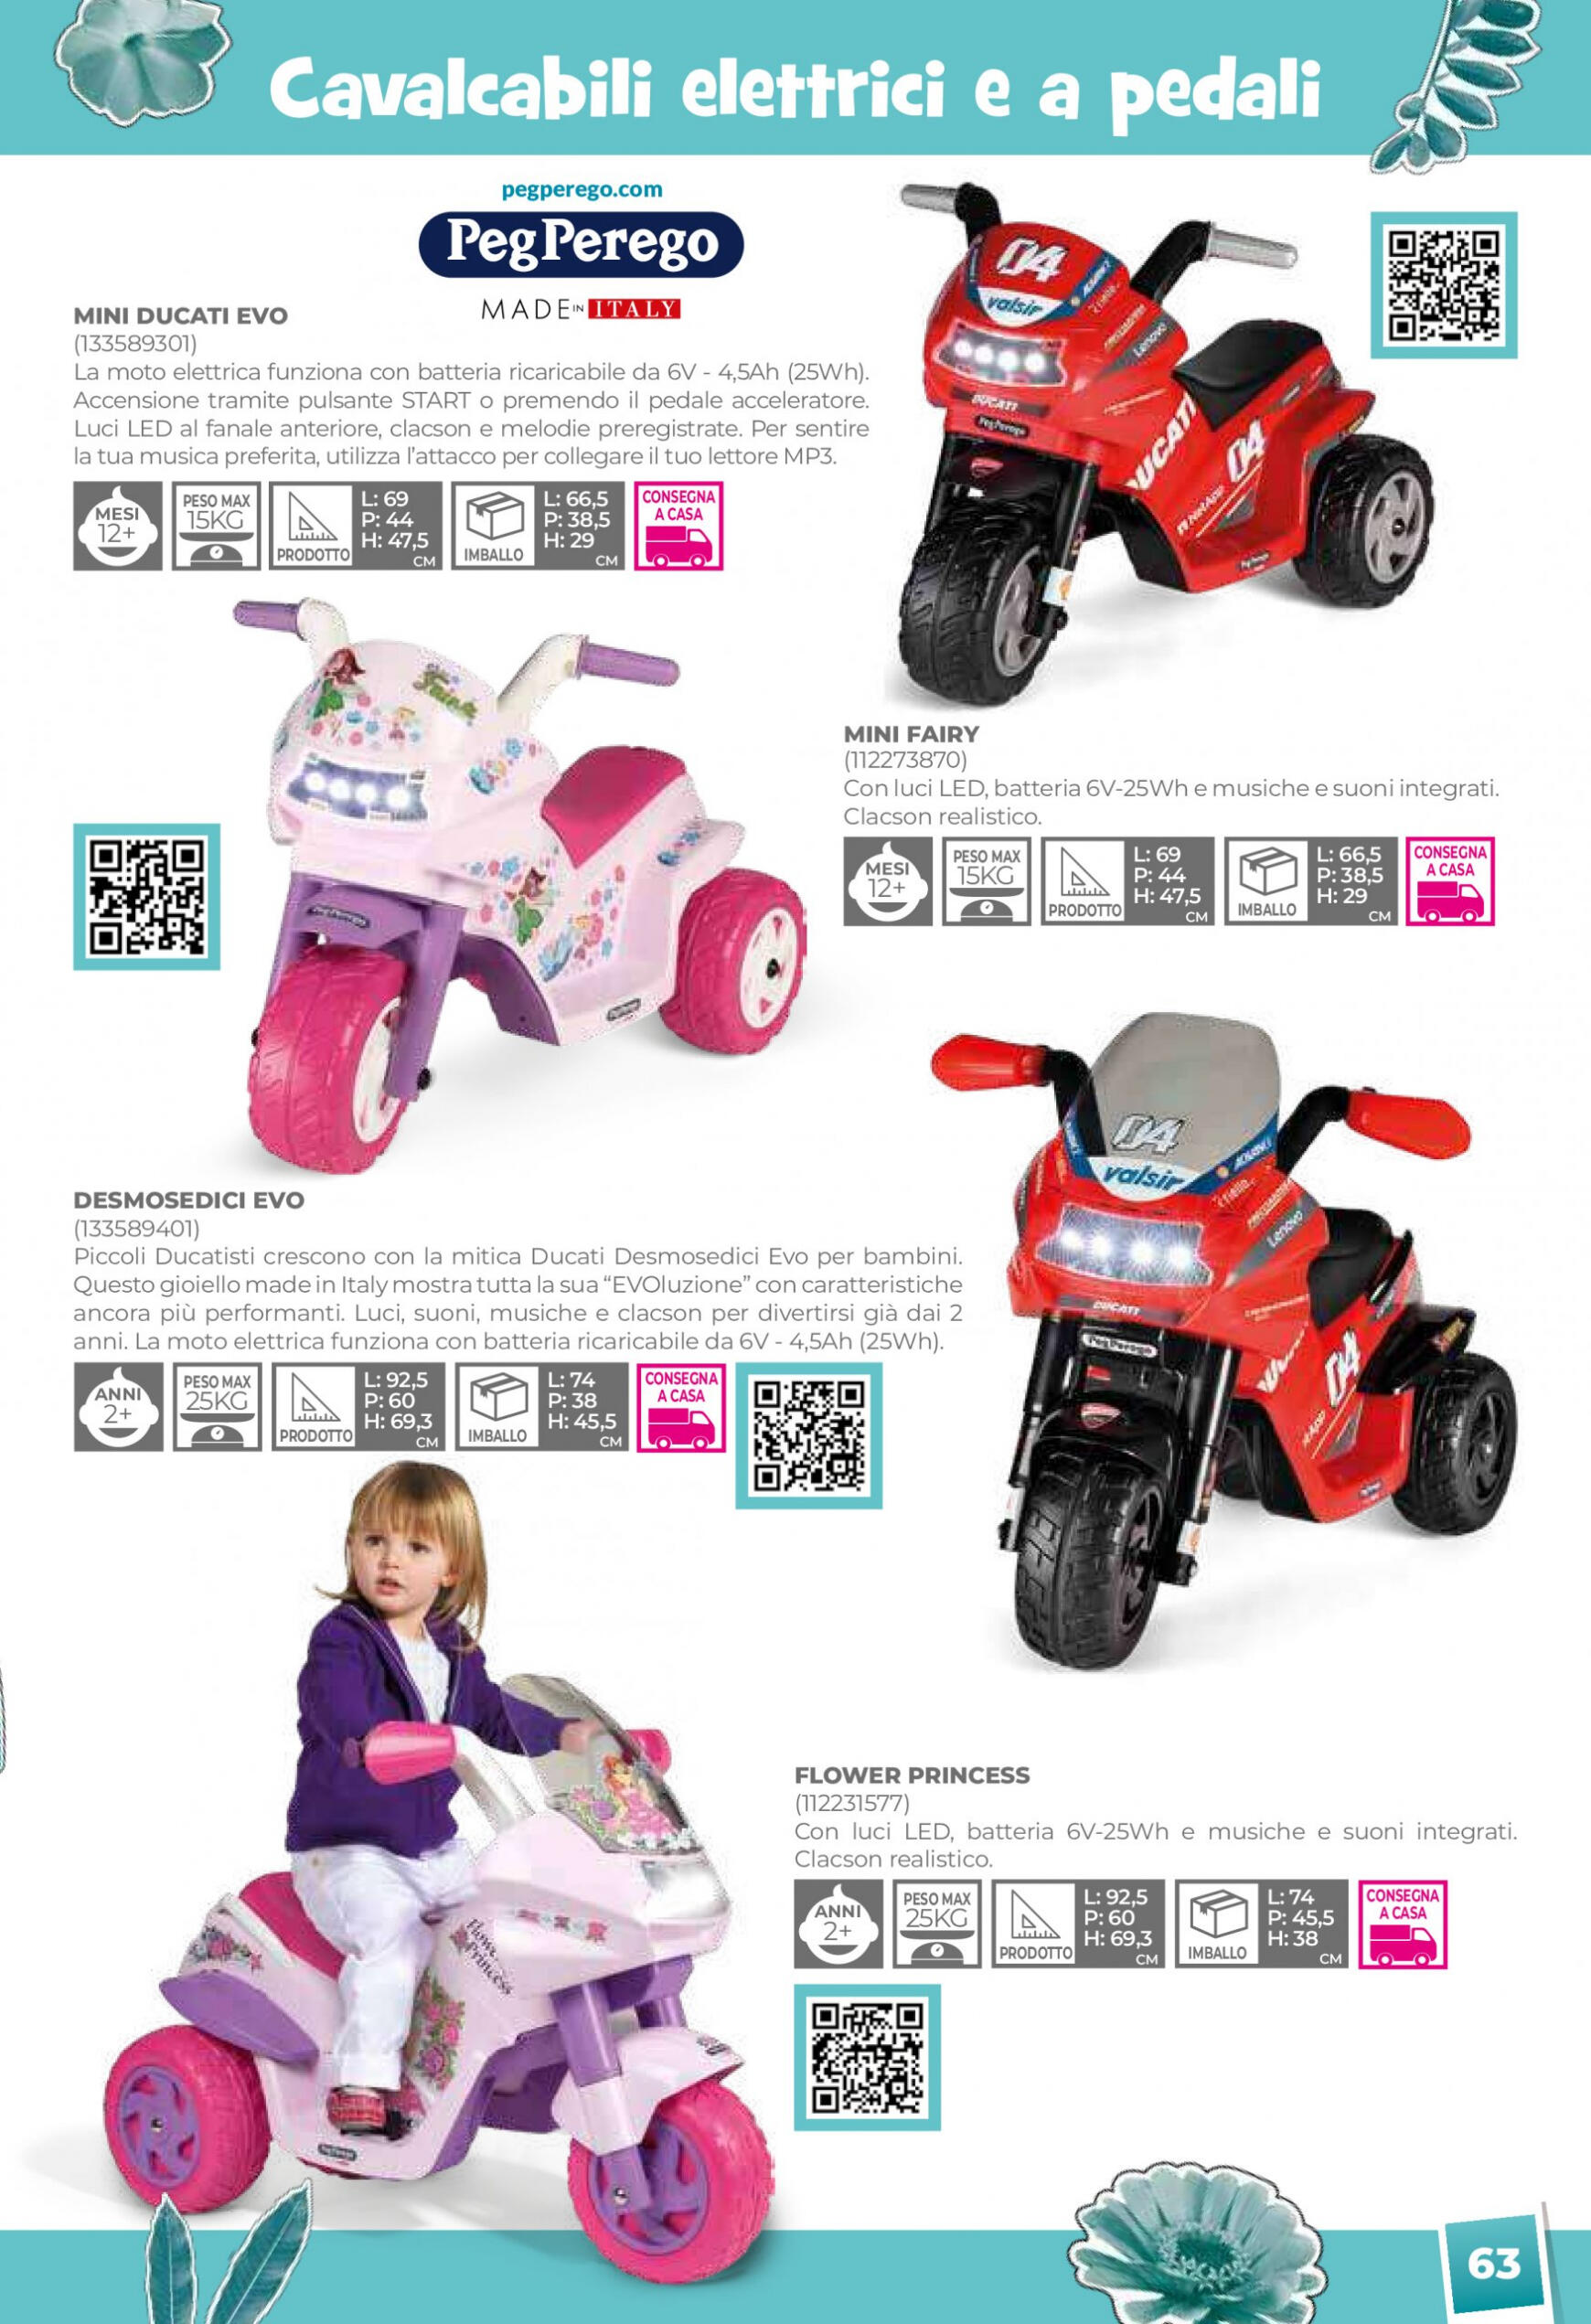 toys-center - Nuovo volantino Toys Center 01.05. - 31.12. - page: 65